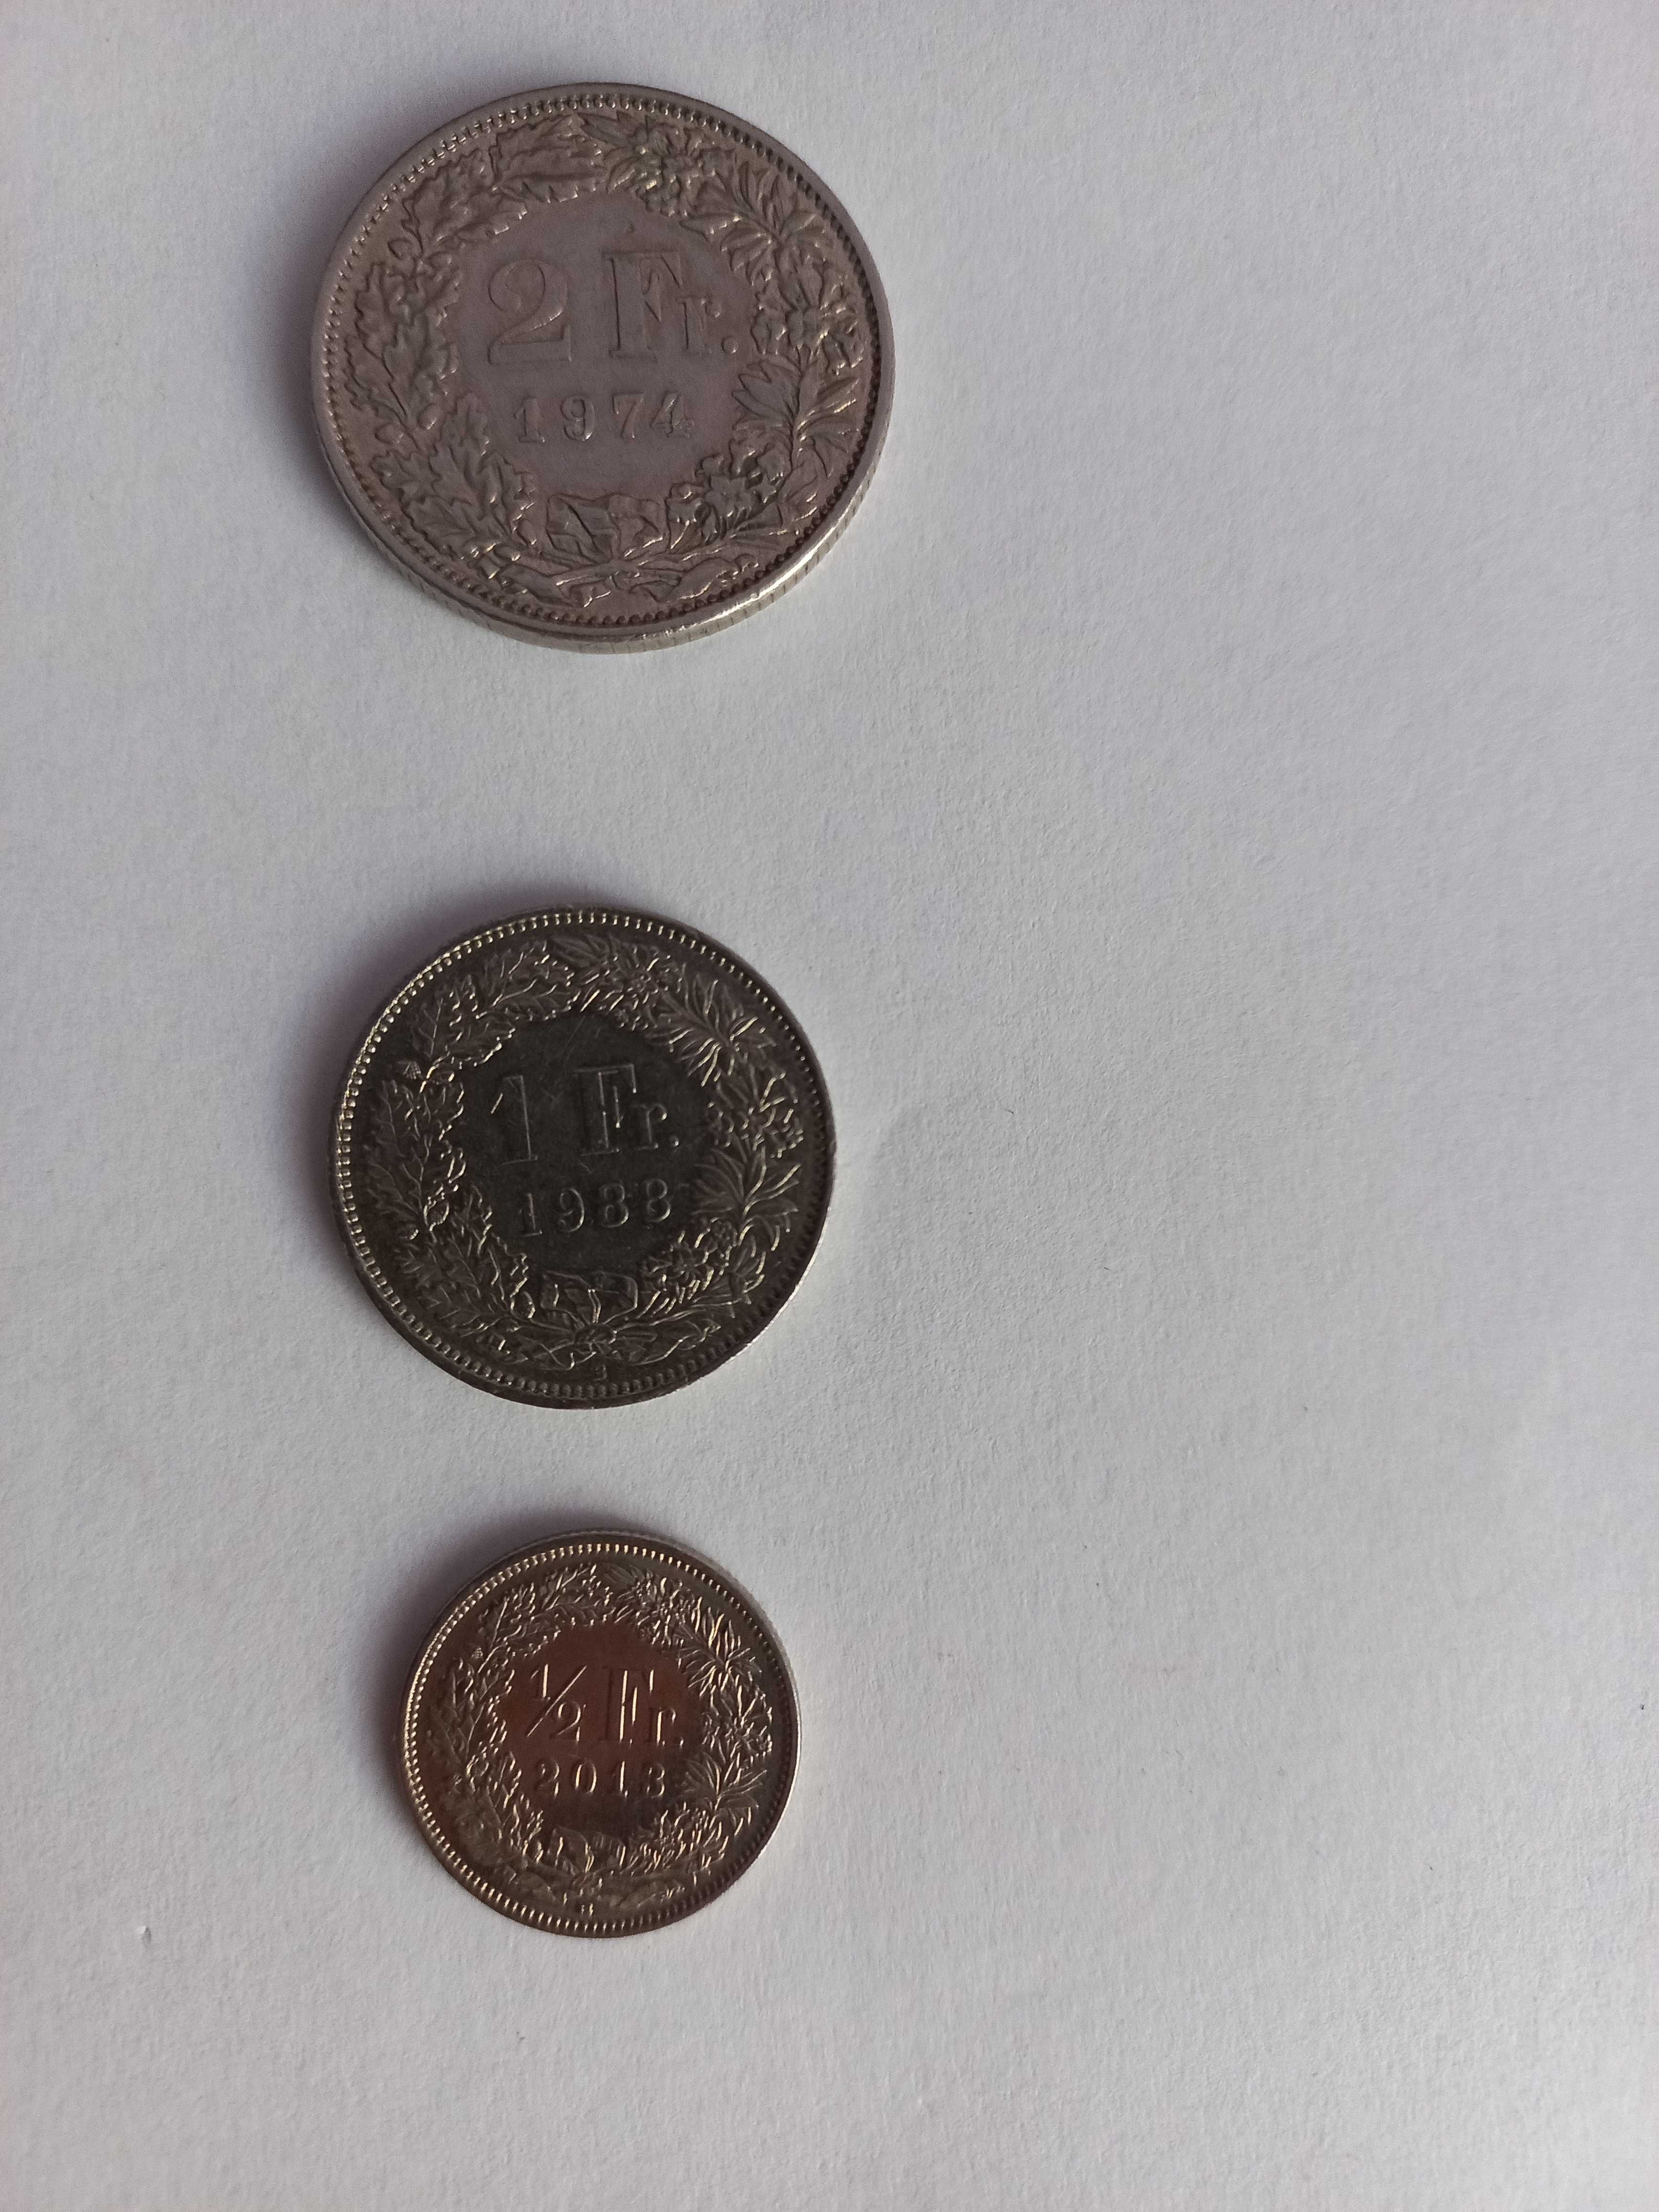 Швейцария франк монета медь коллекция антиквариат хобби